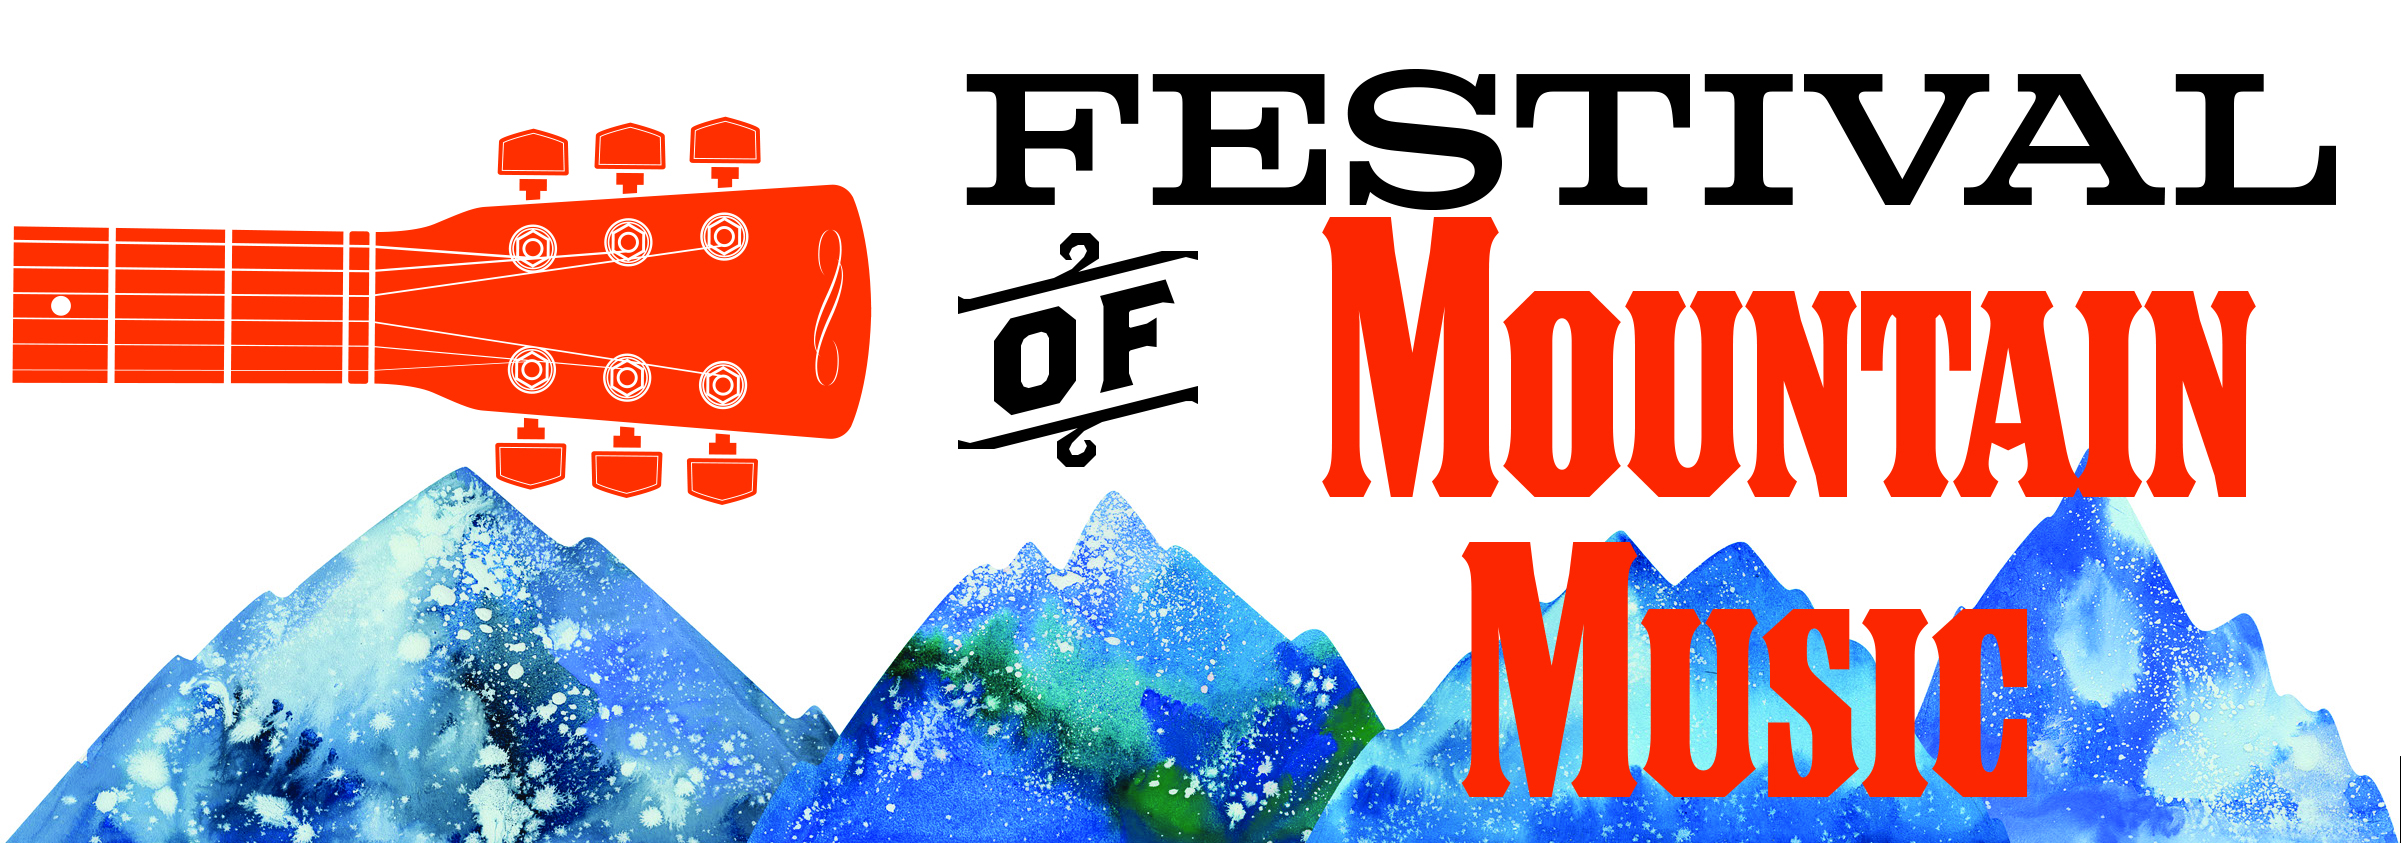 Festival of Mountain Music